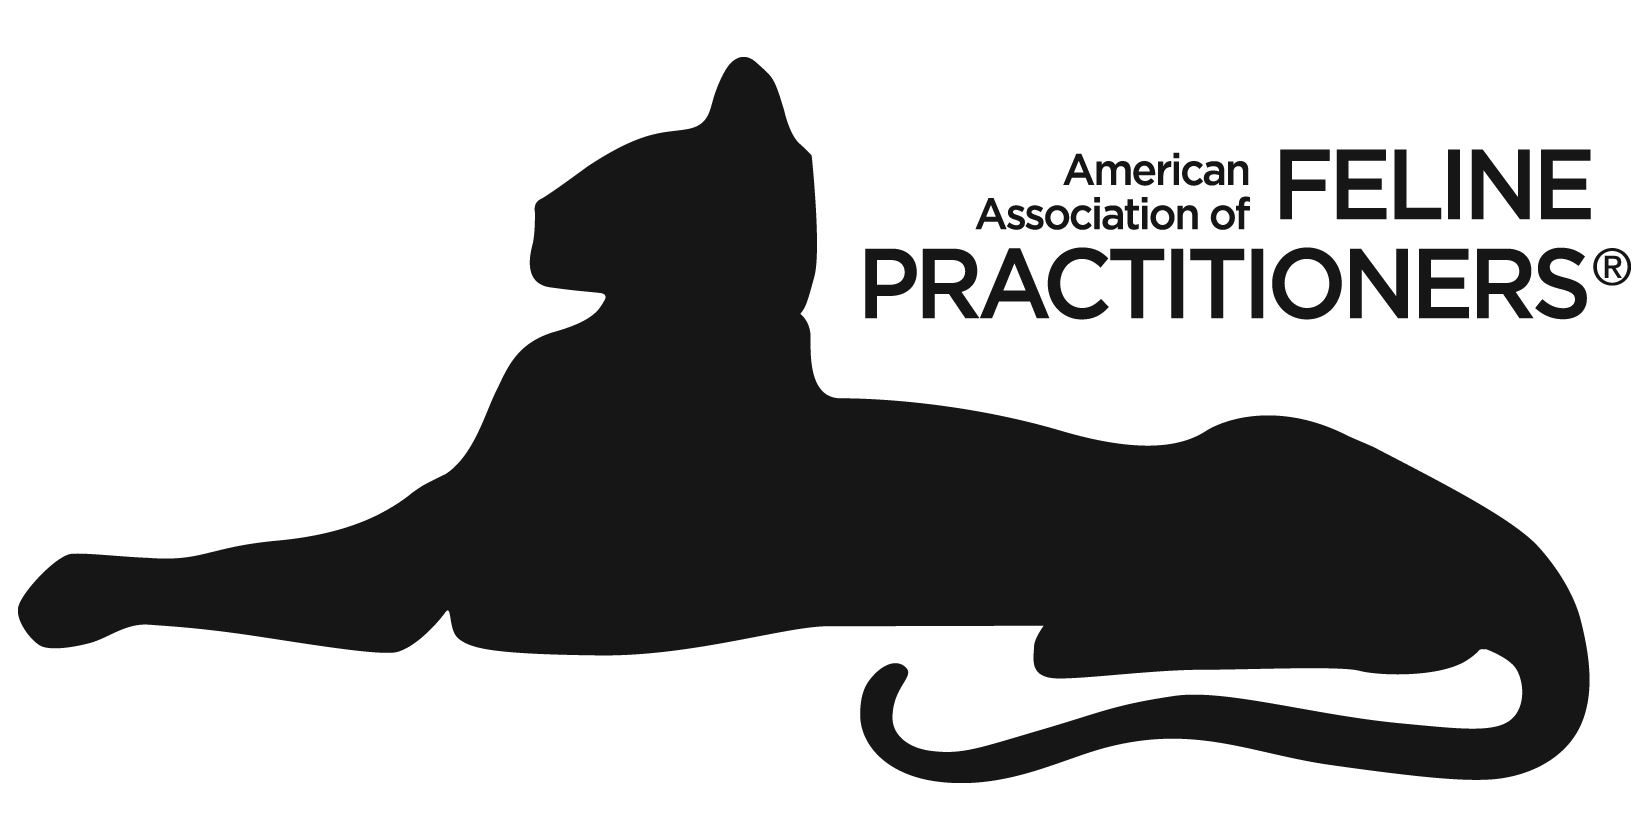 The American Association of Feline Practitioners (AAFP), creators of catfriendly.com